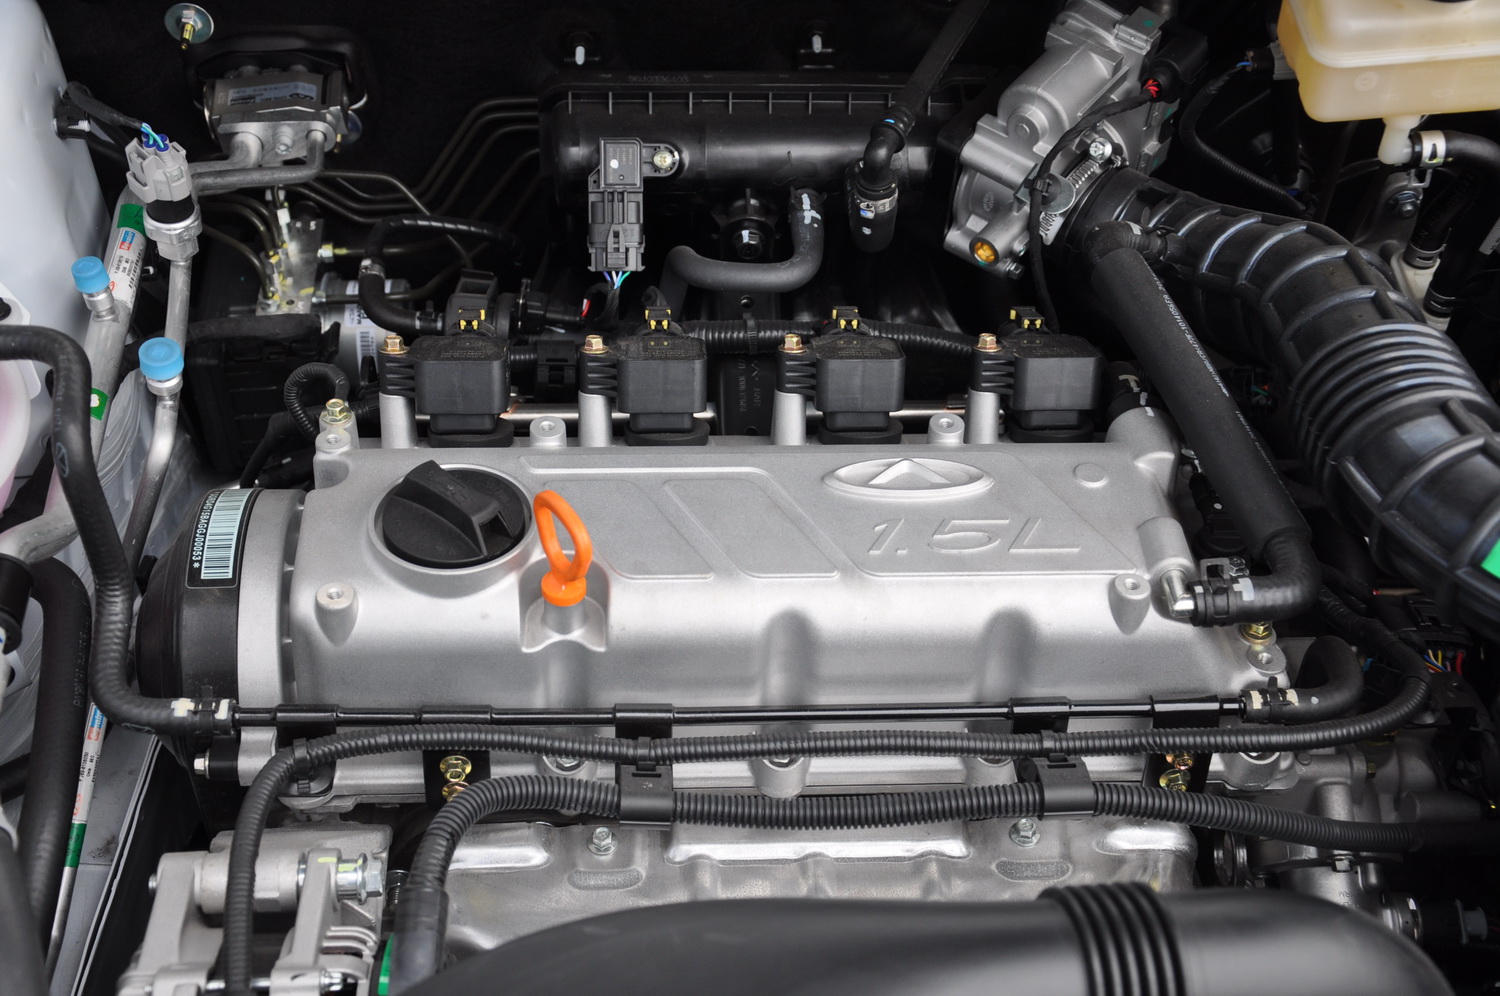 5l排量直列四缸自然吸气发动机,最大功率为78kw,最大扭矩为135nm